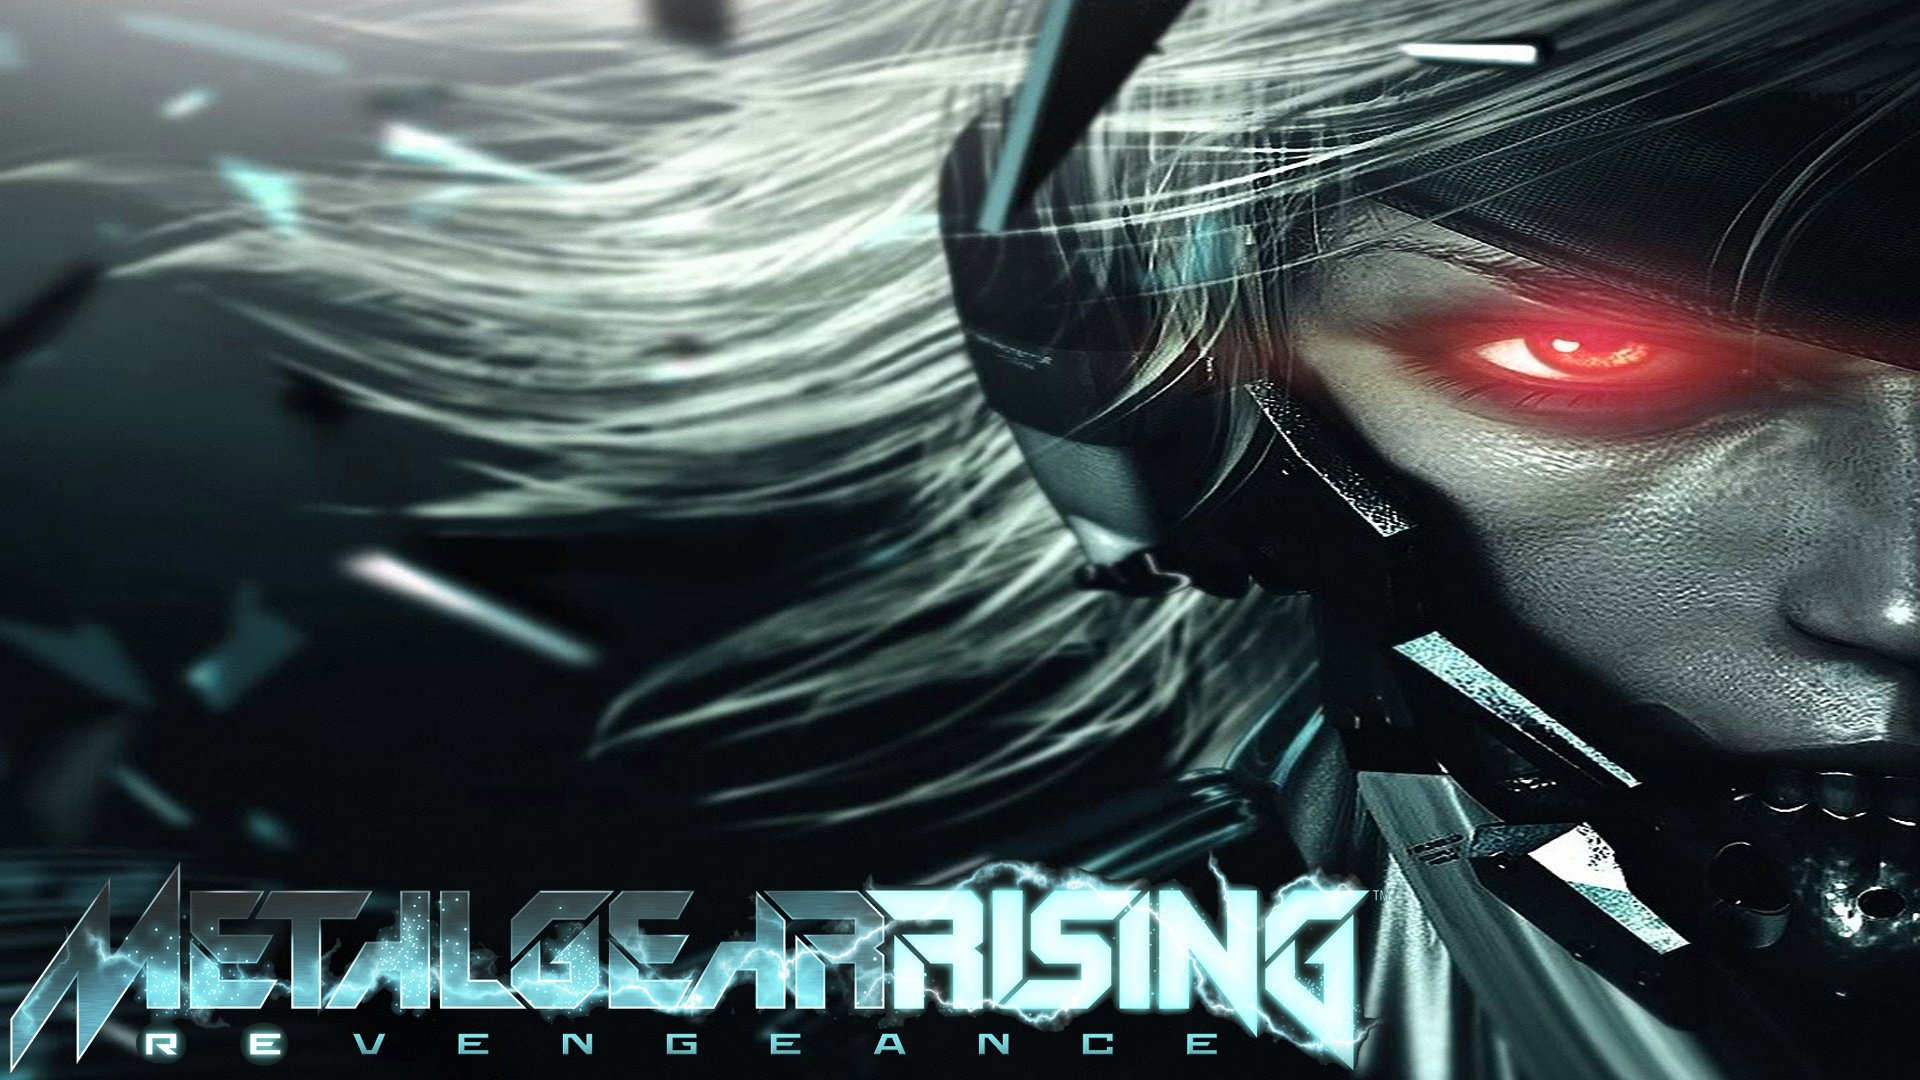 Description Metal Gear Rising Background is a hi res Wallpaper for pc